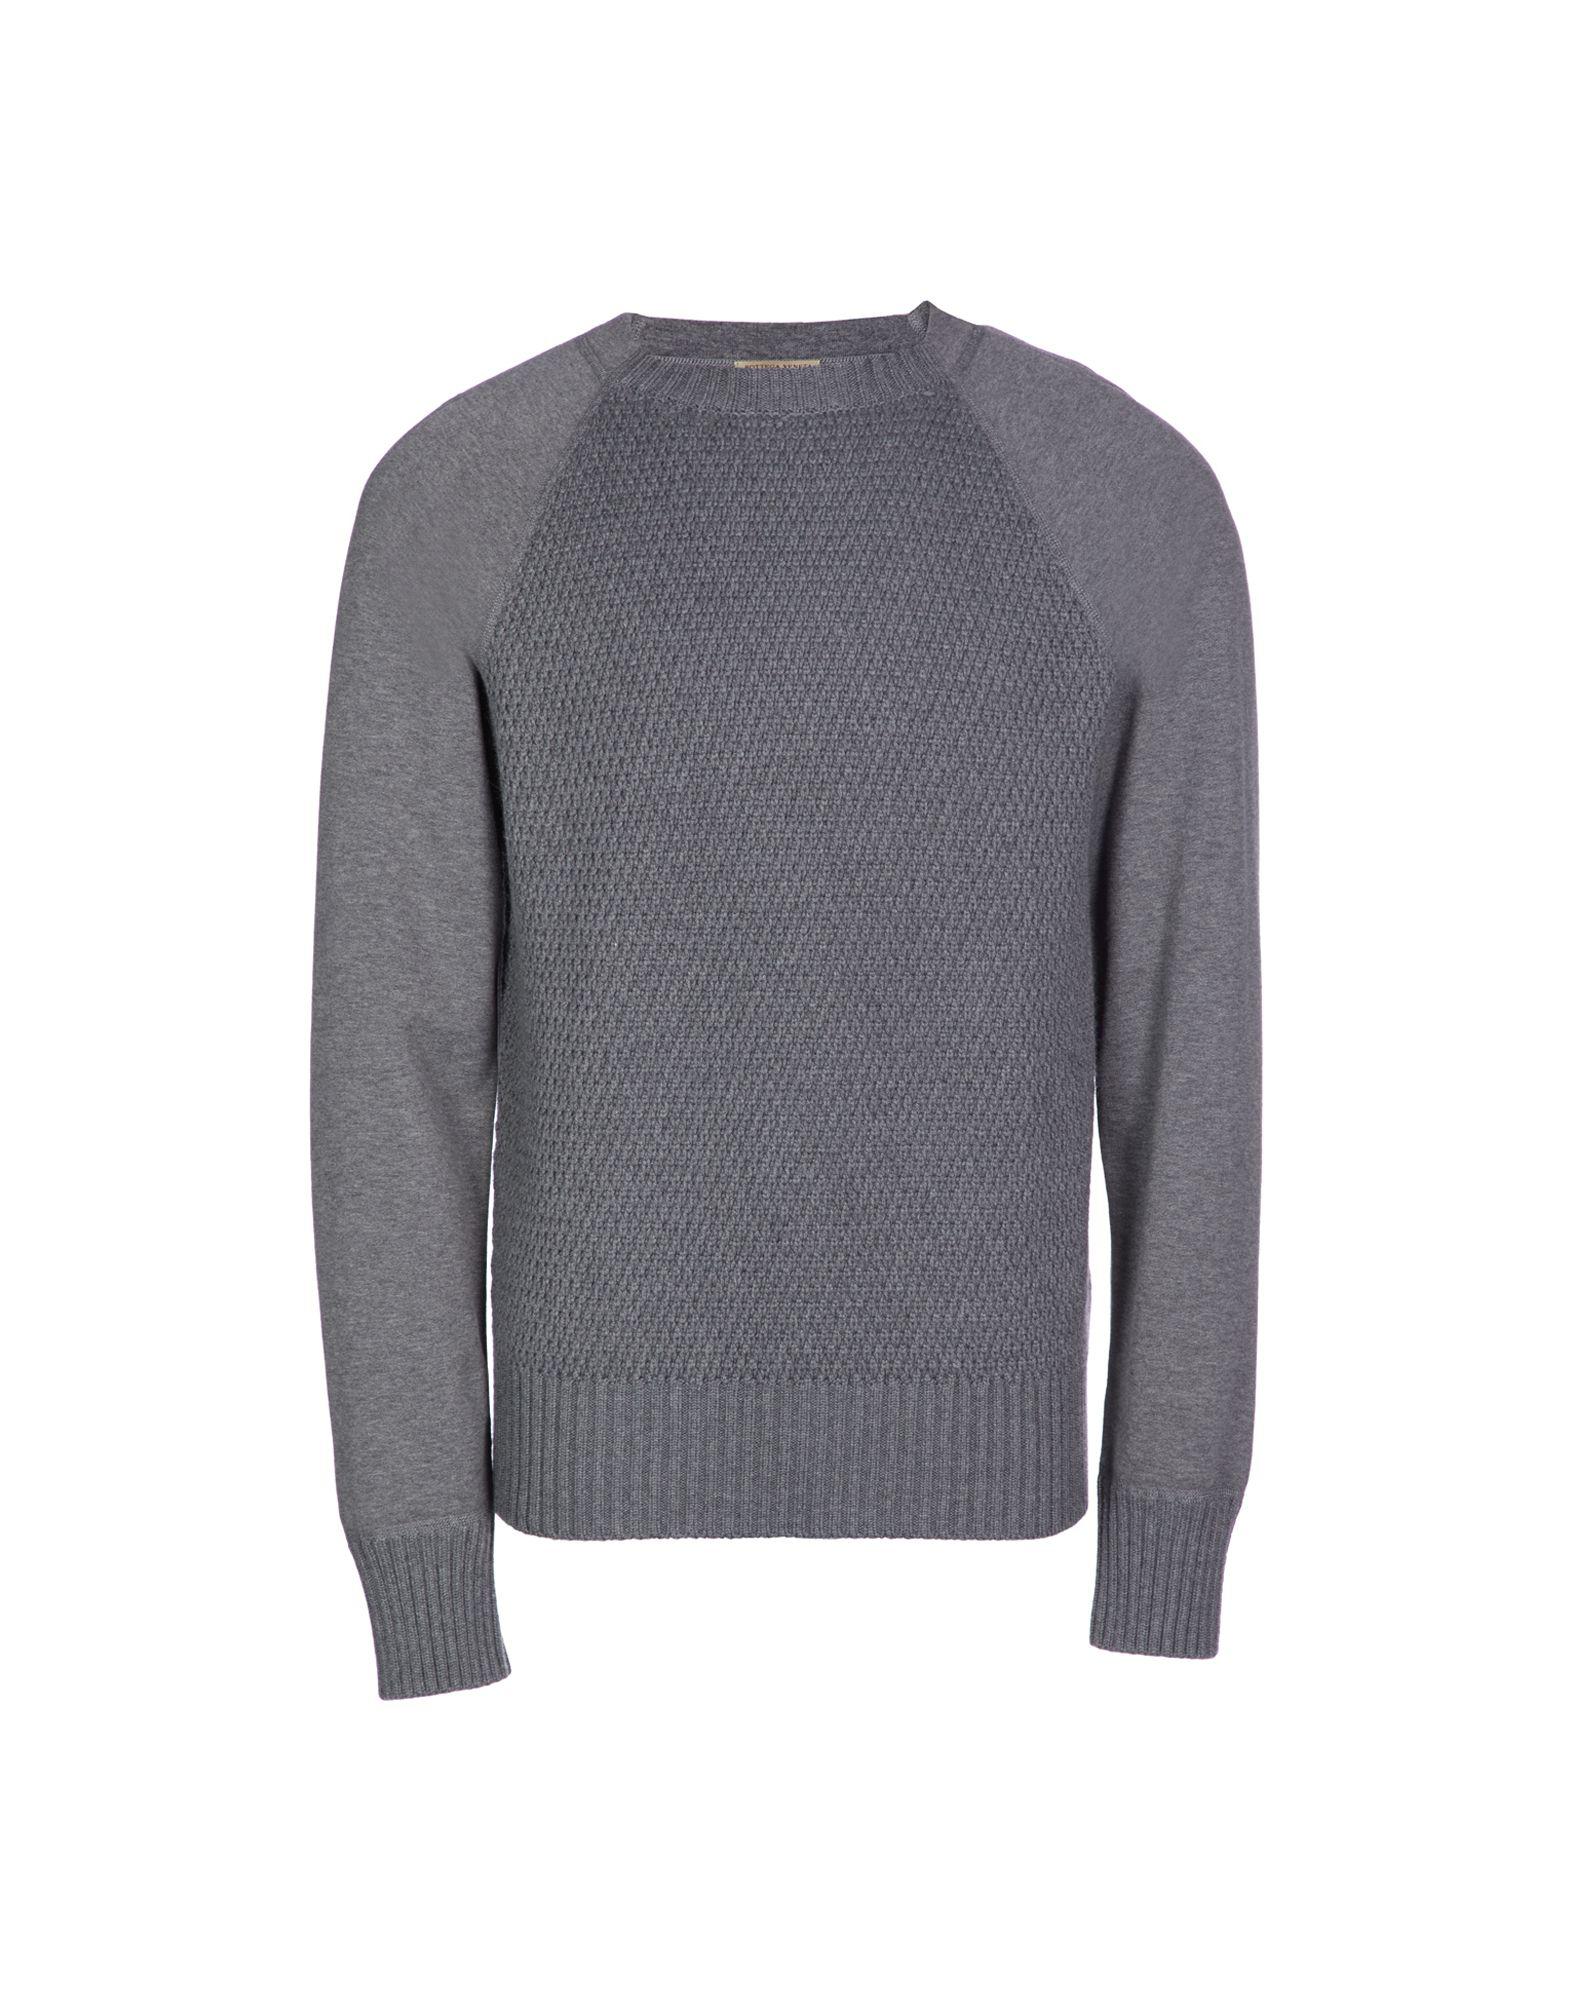 Bottega Veneta Cotton Sweater in Grey (Gray) for Men - Lyst